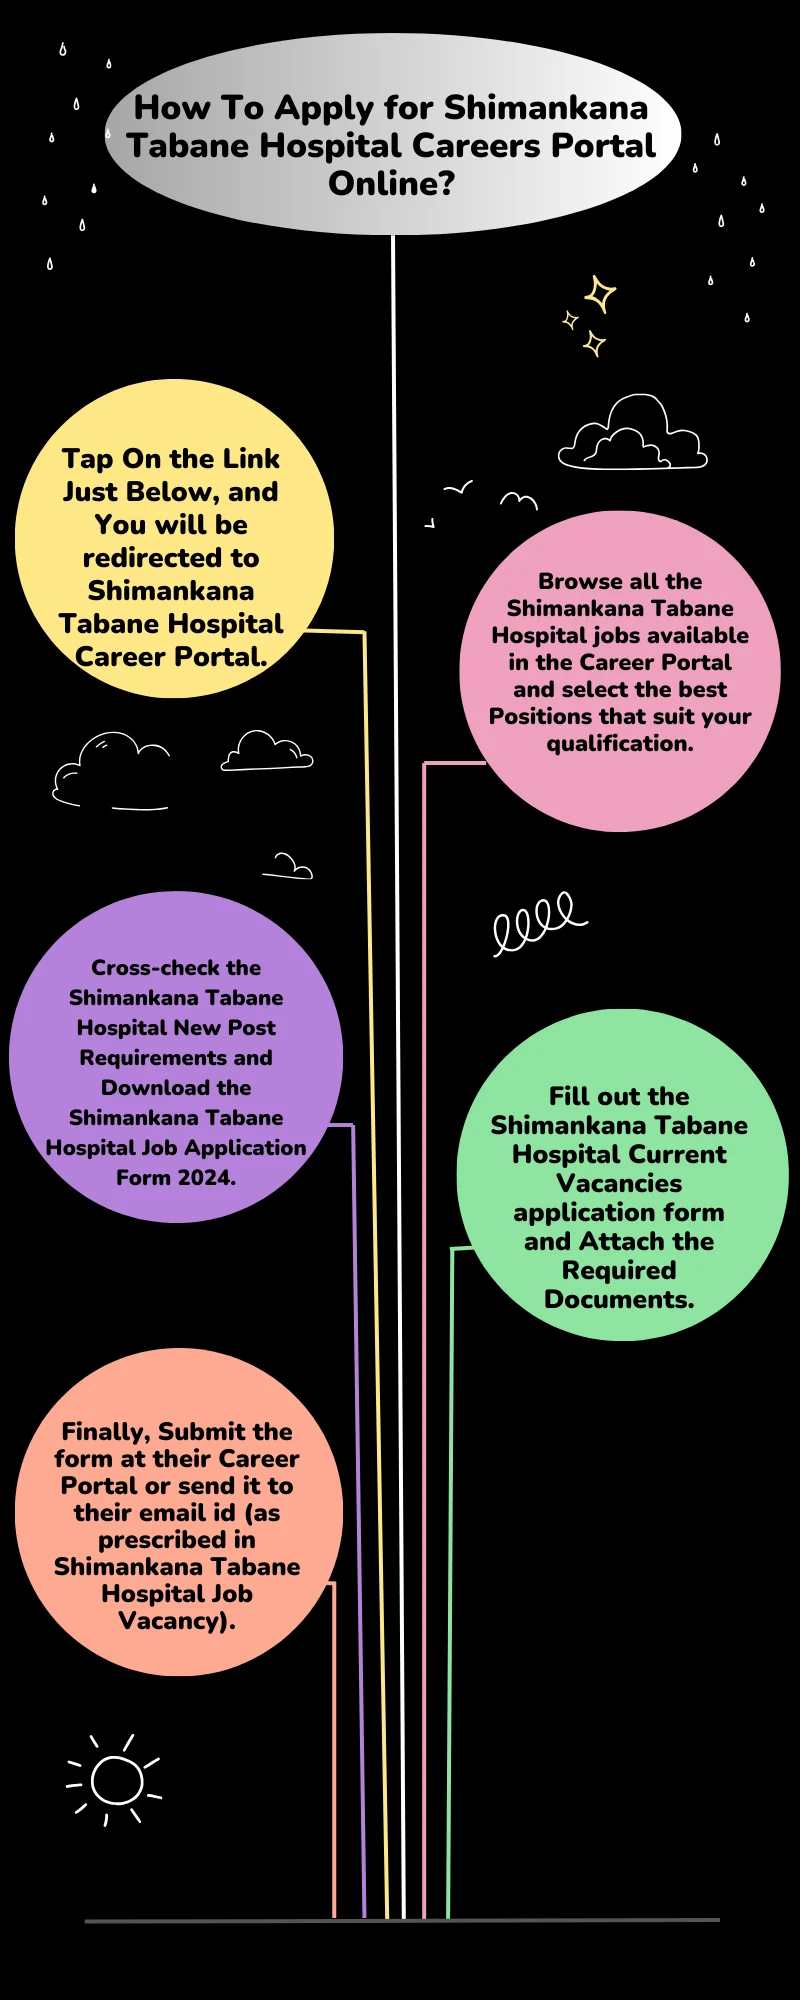 How To Apply for Shimankana Tabane Hospital Careers Portal Online?